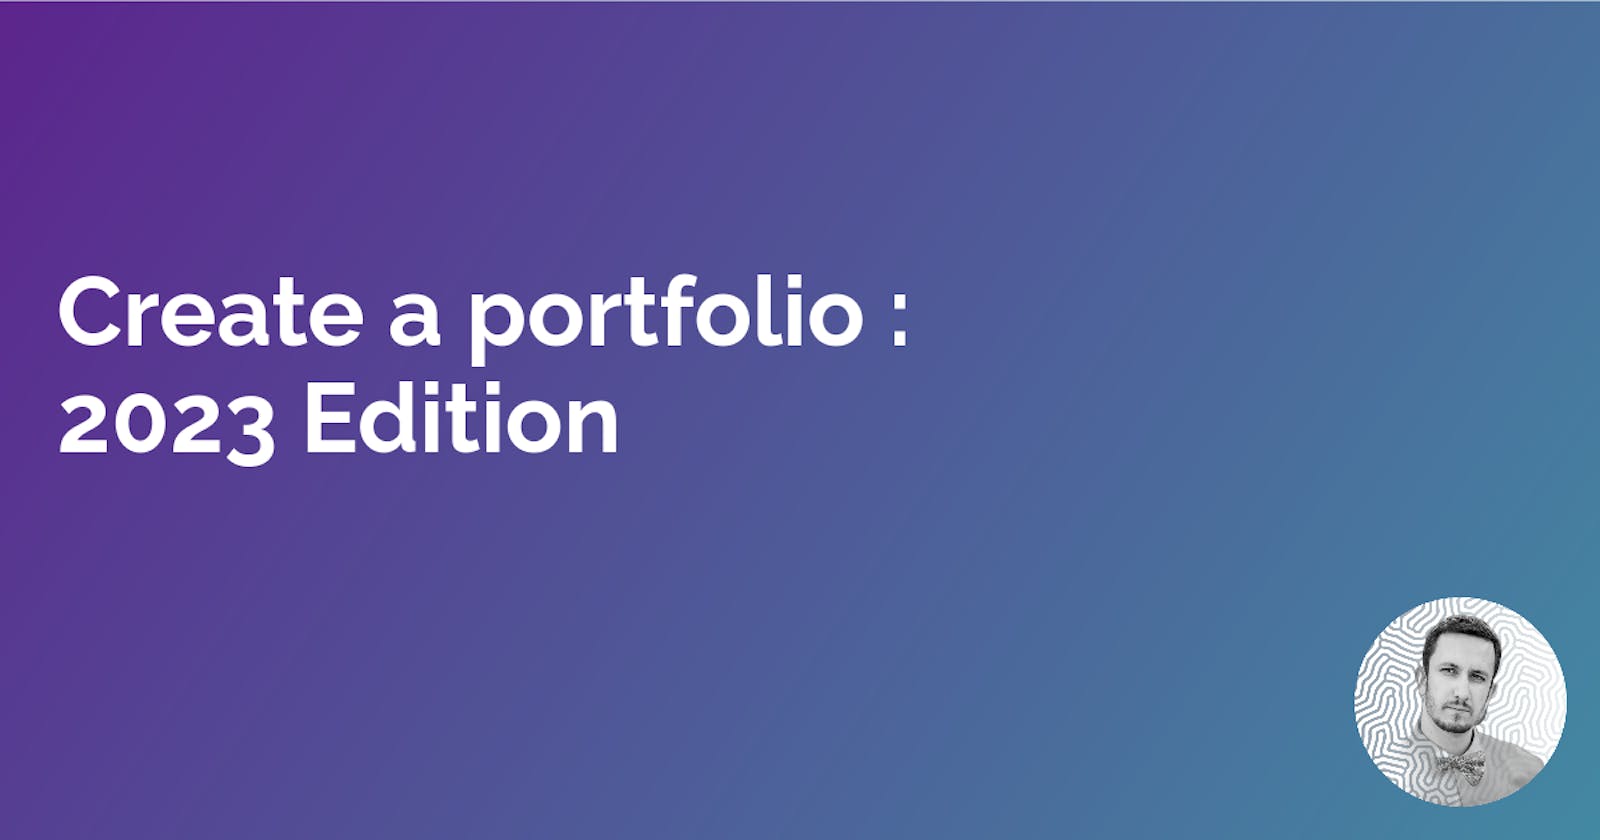 Create a portfolio : 2023 Edition